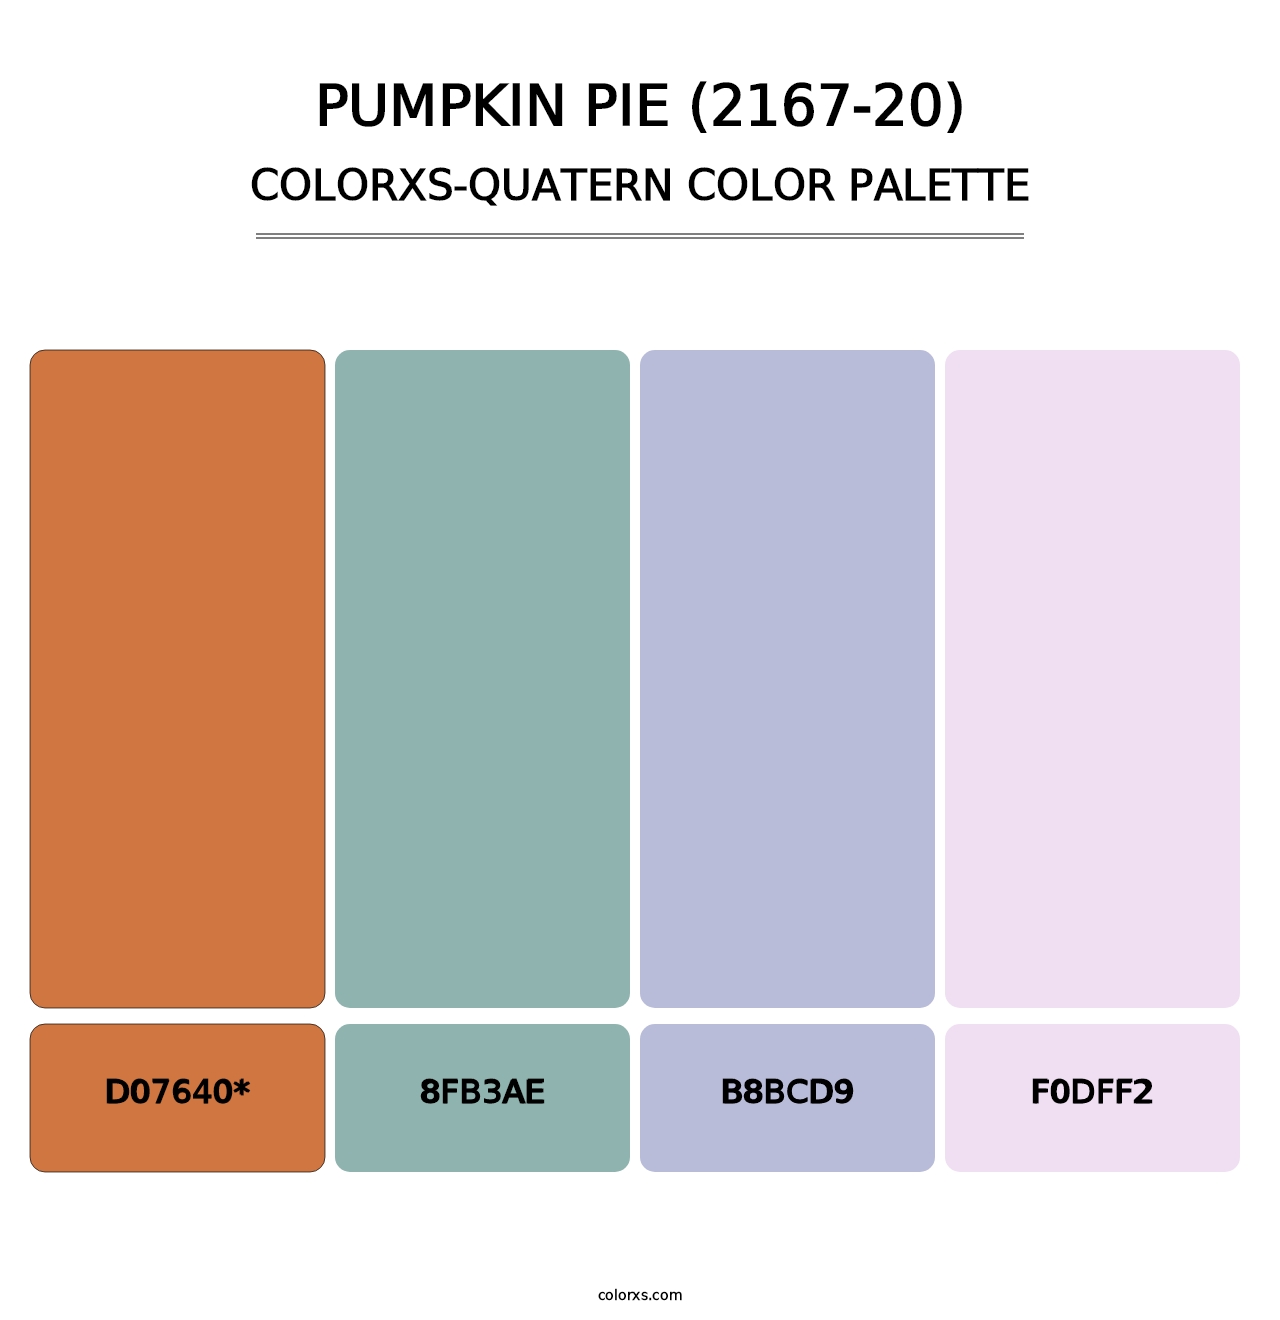 Pumpkin Pie (2167-20) - Colorxs Quatern Palette